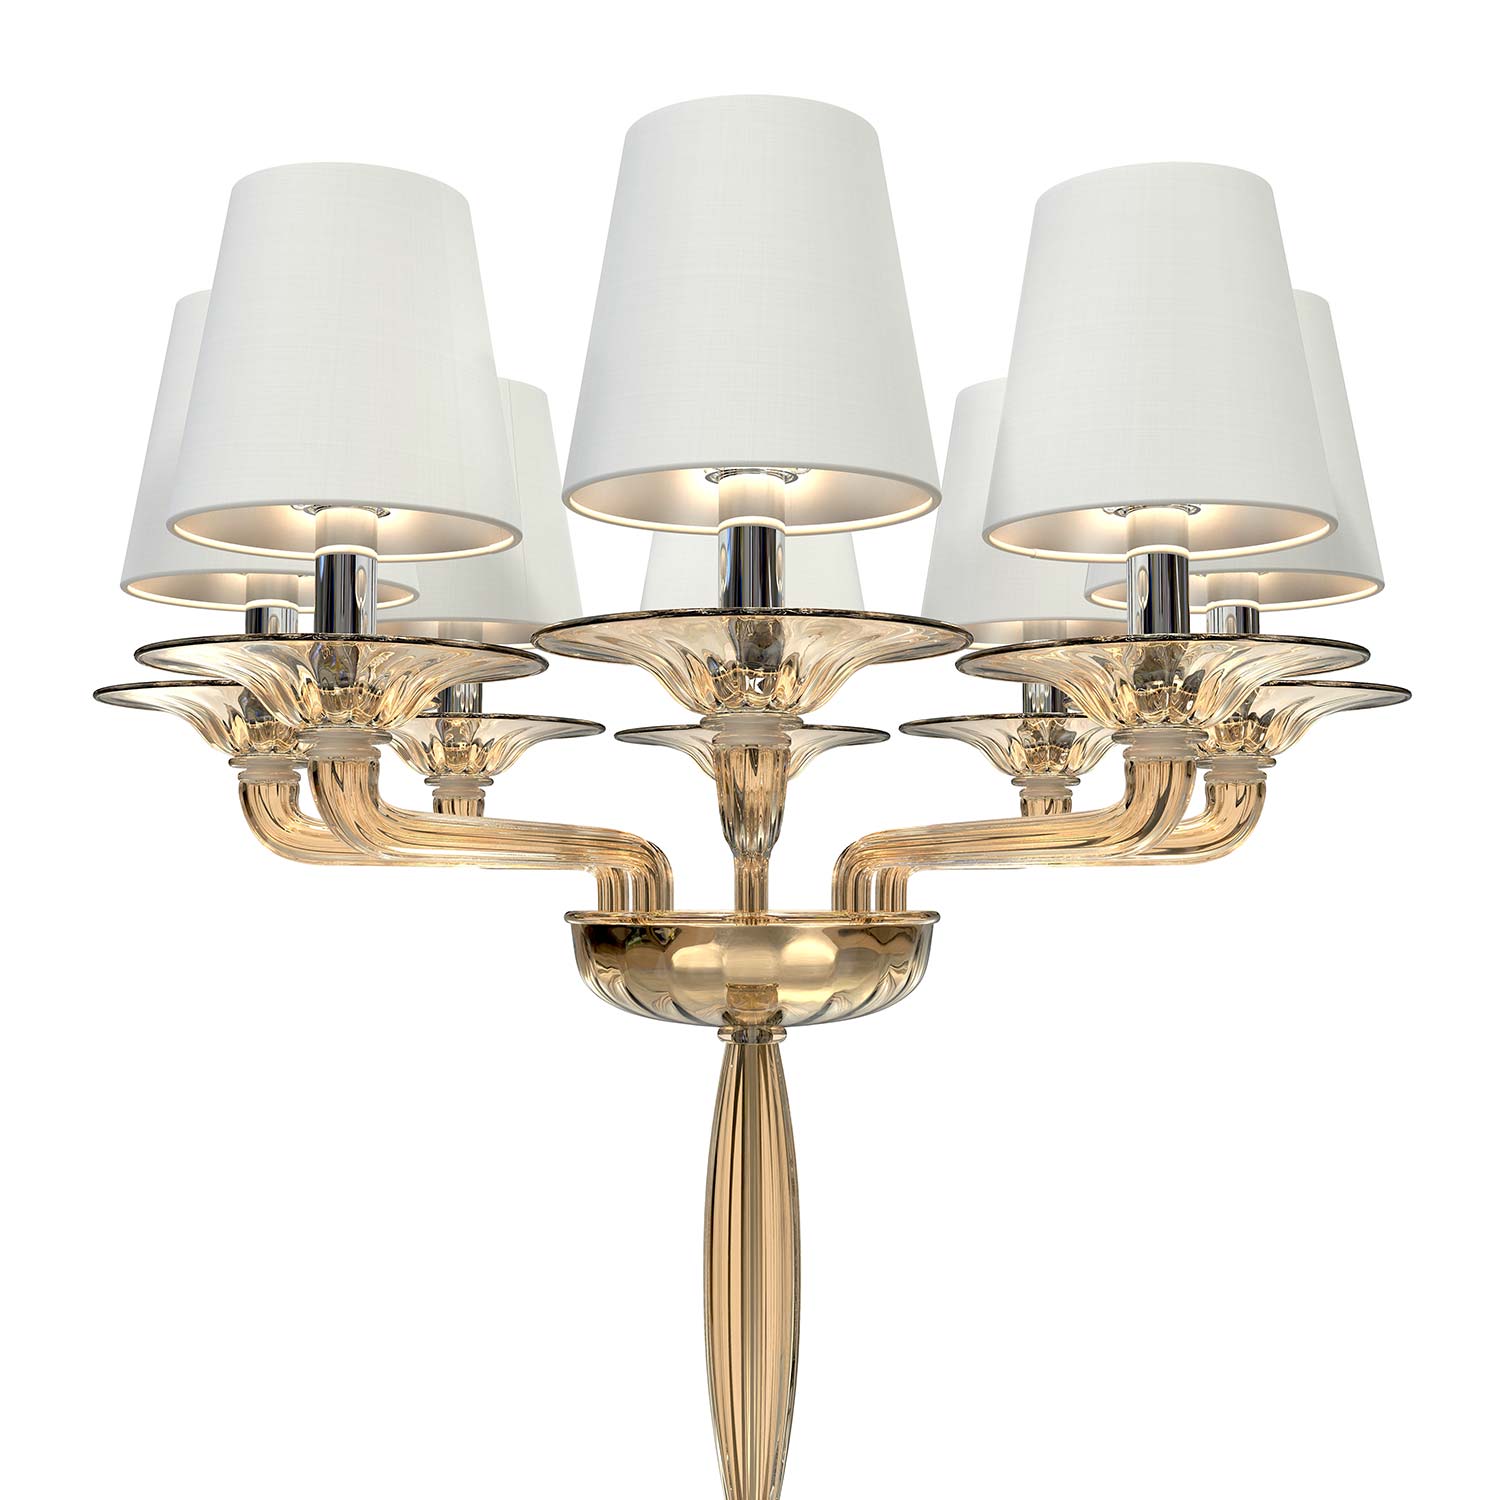 Luxury 8 lights glass floor lamp